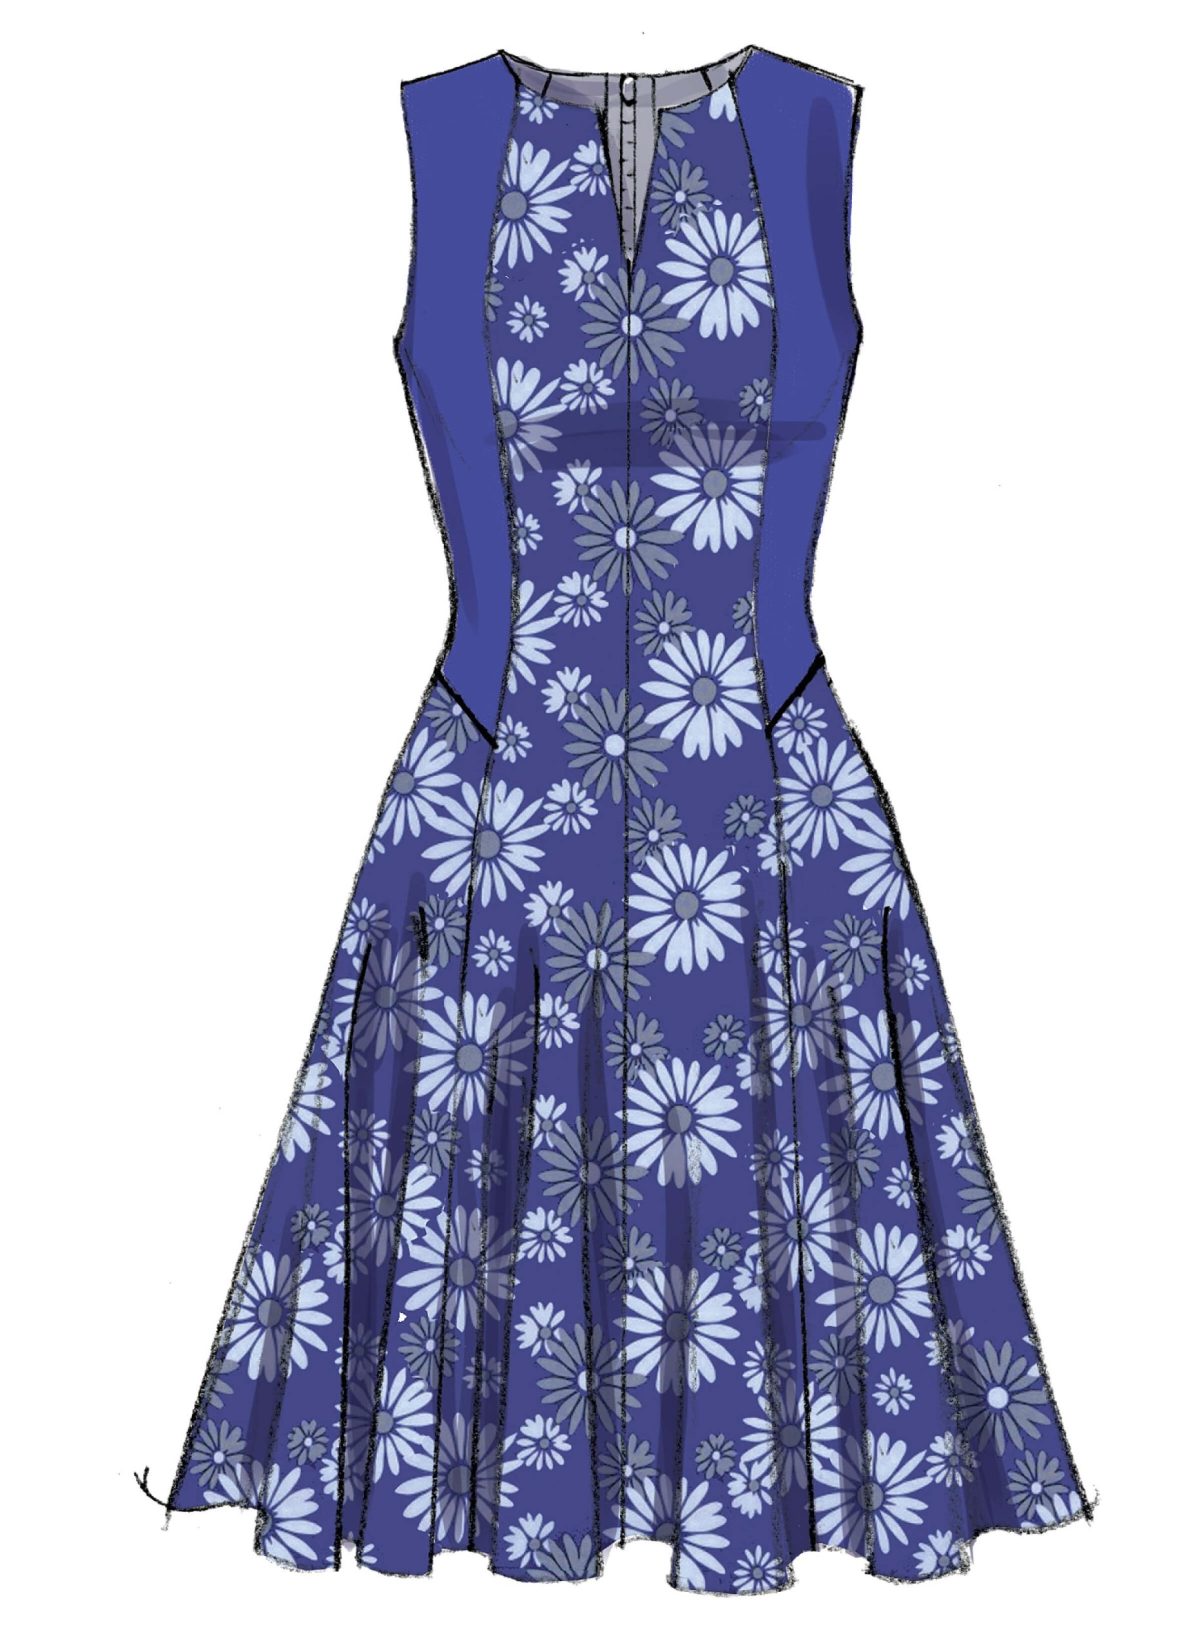 Vogue Patterns V9050 Misses'/Misses' Petite Dress